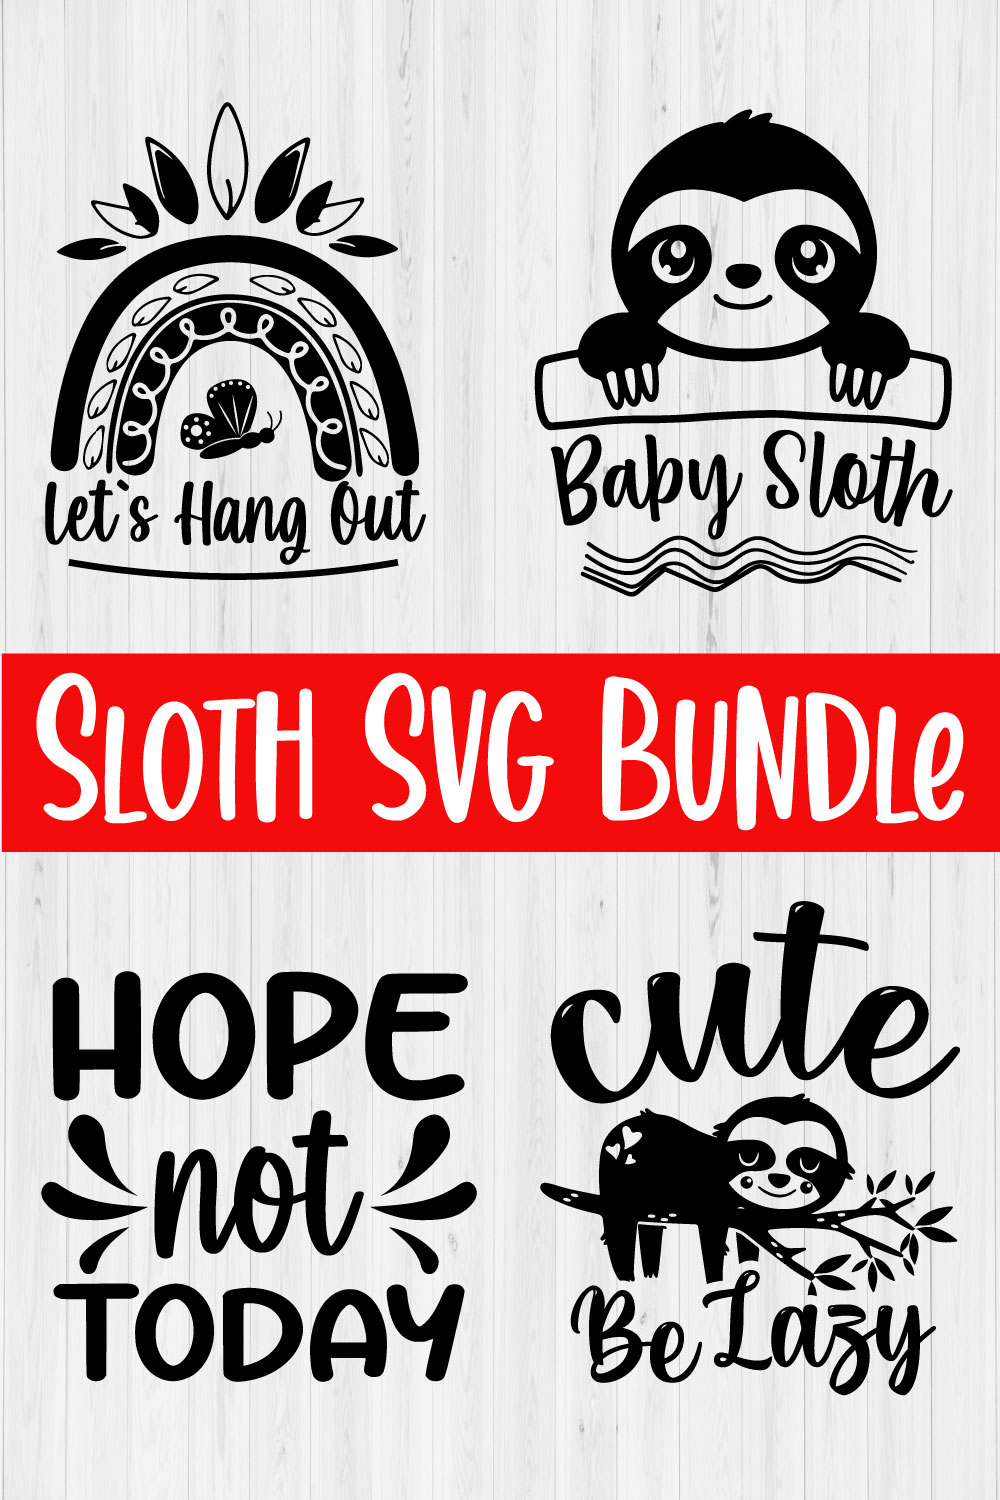 Sloth Svg Design Bundle Vol2 pinterest preview image.